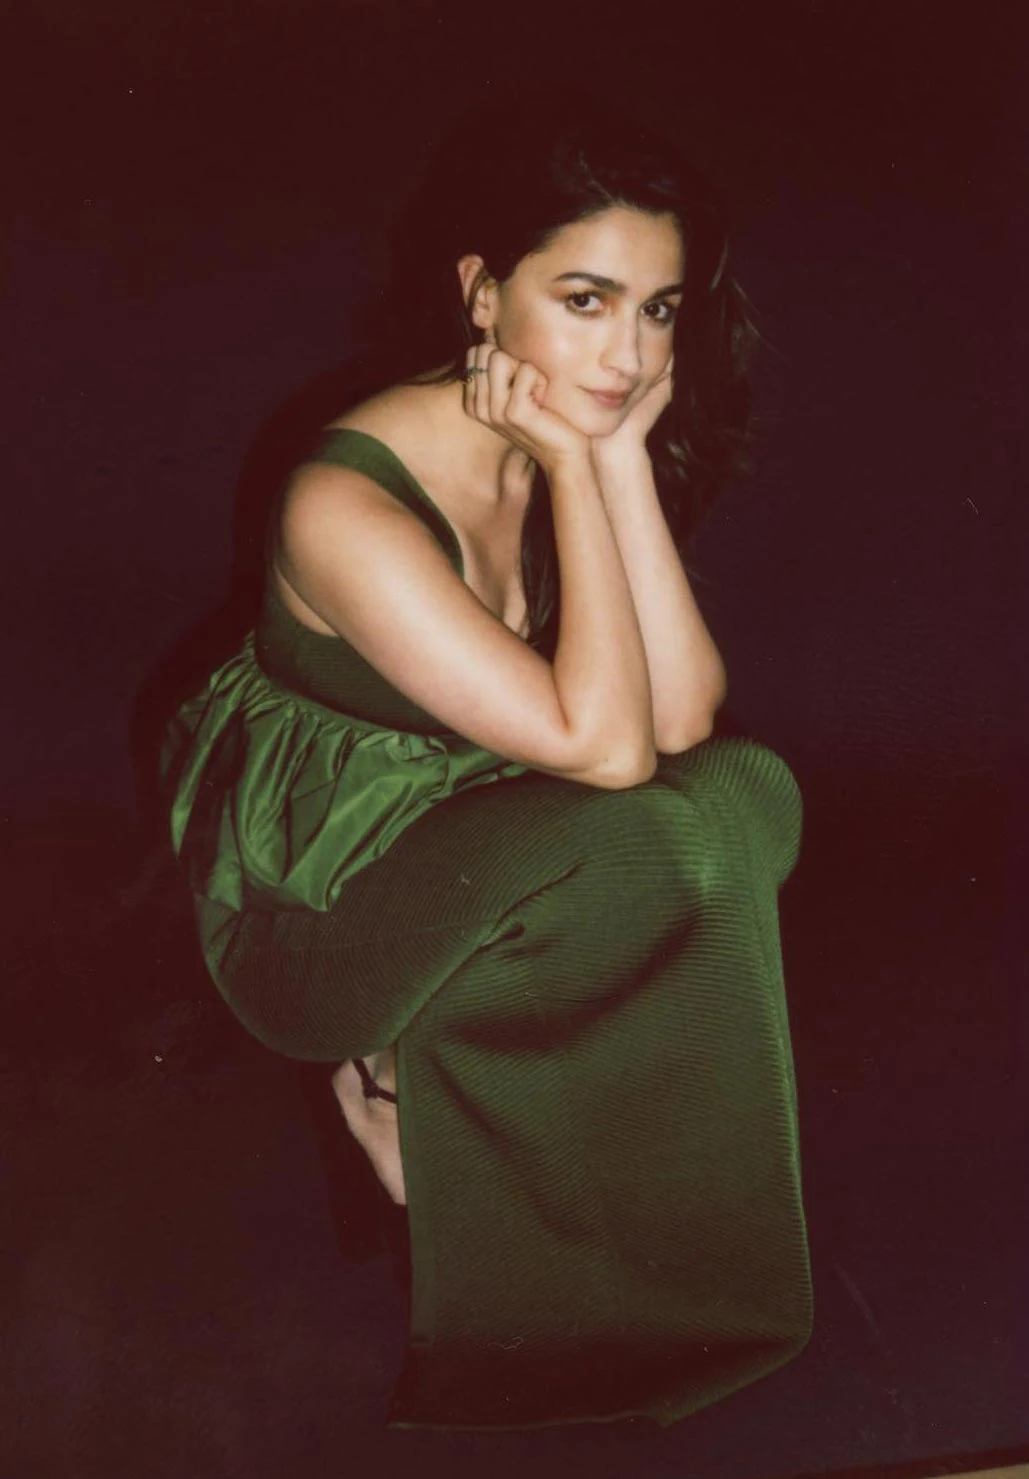 Alia Bhatt green dress cleavage hot actress